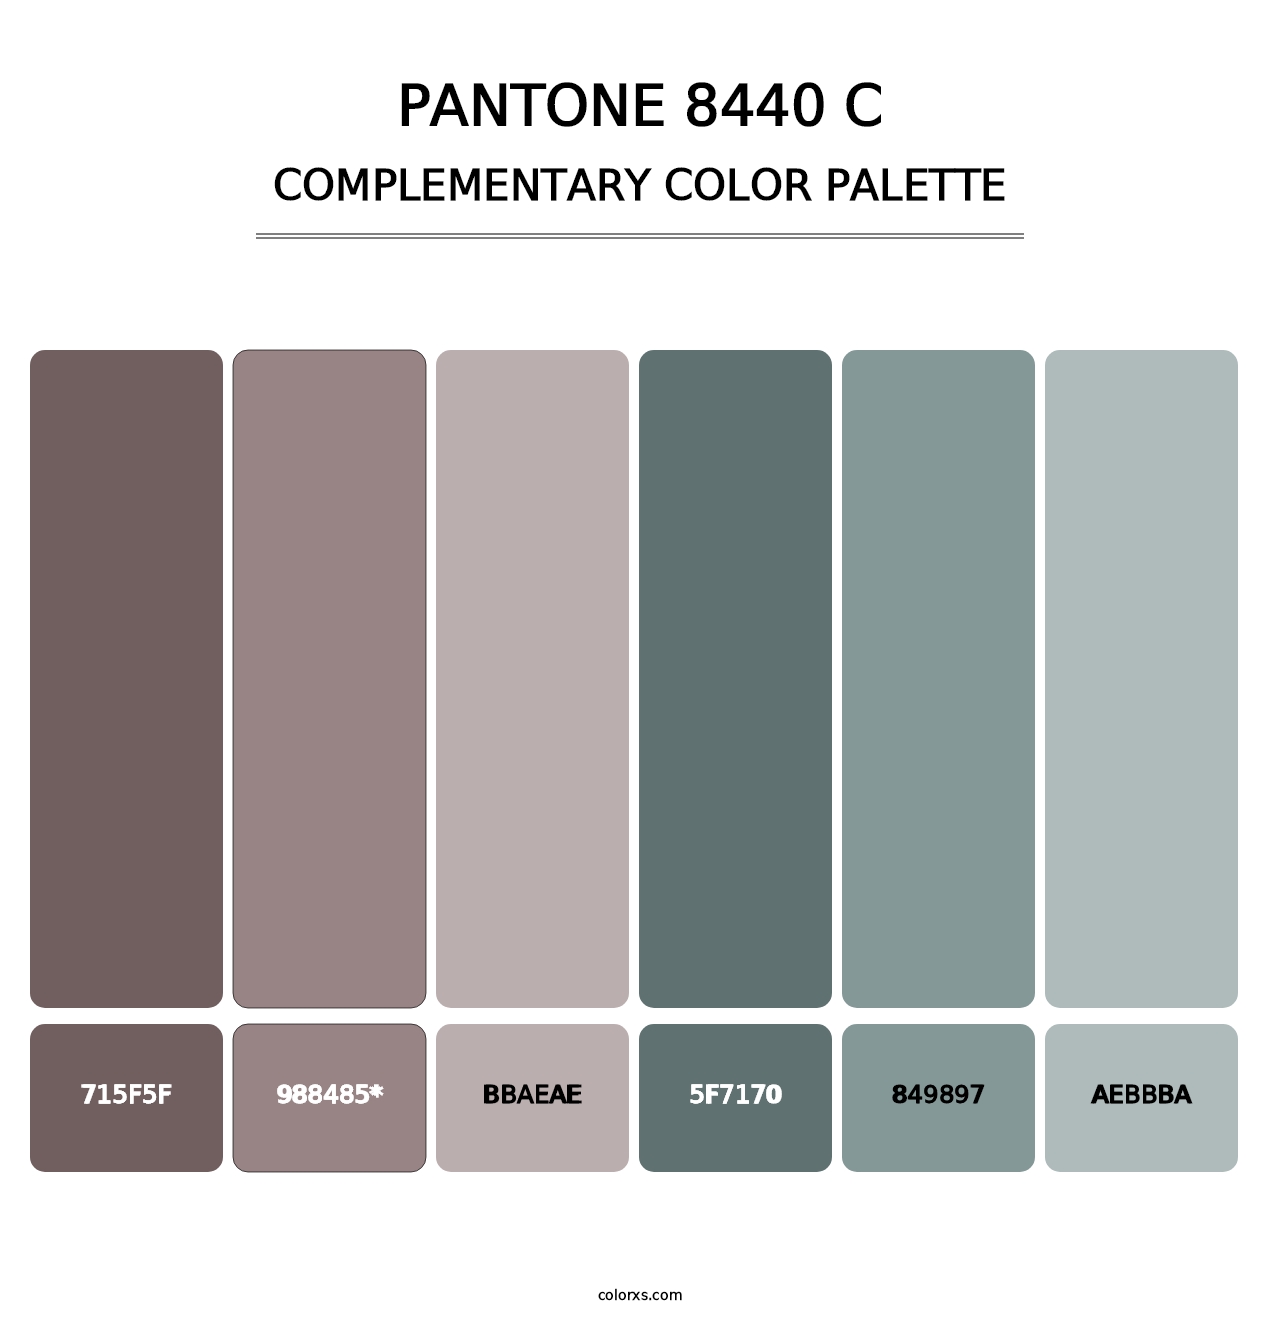 PANTONE 8440 C - Complementary Color Palette